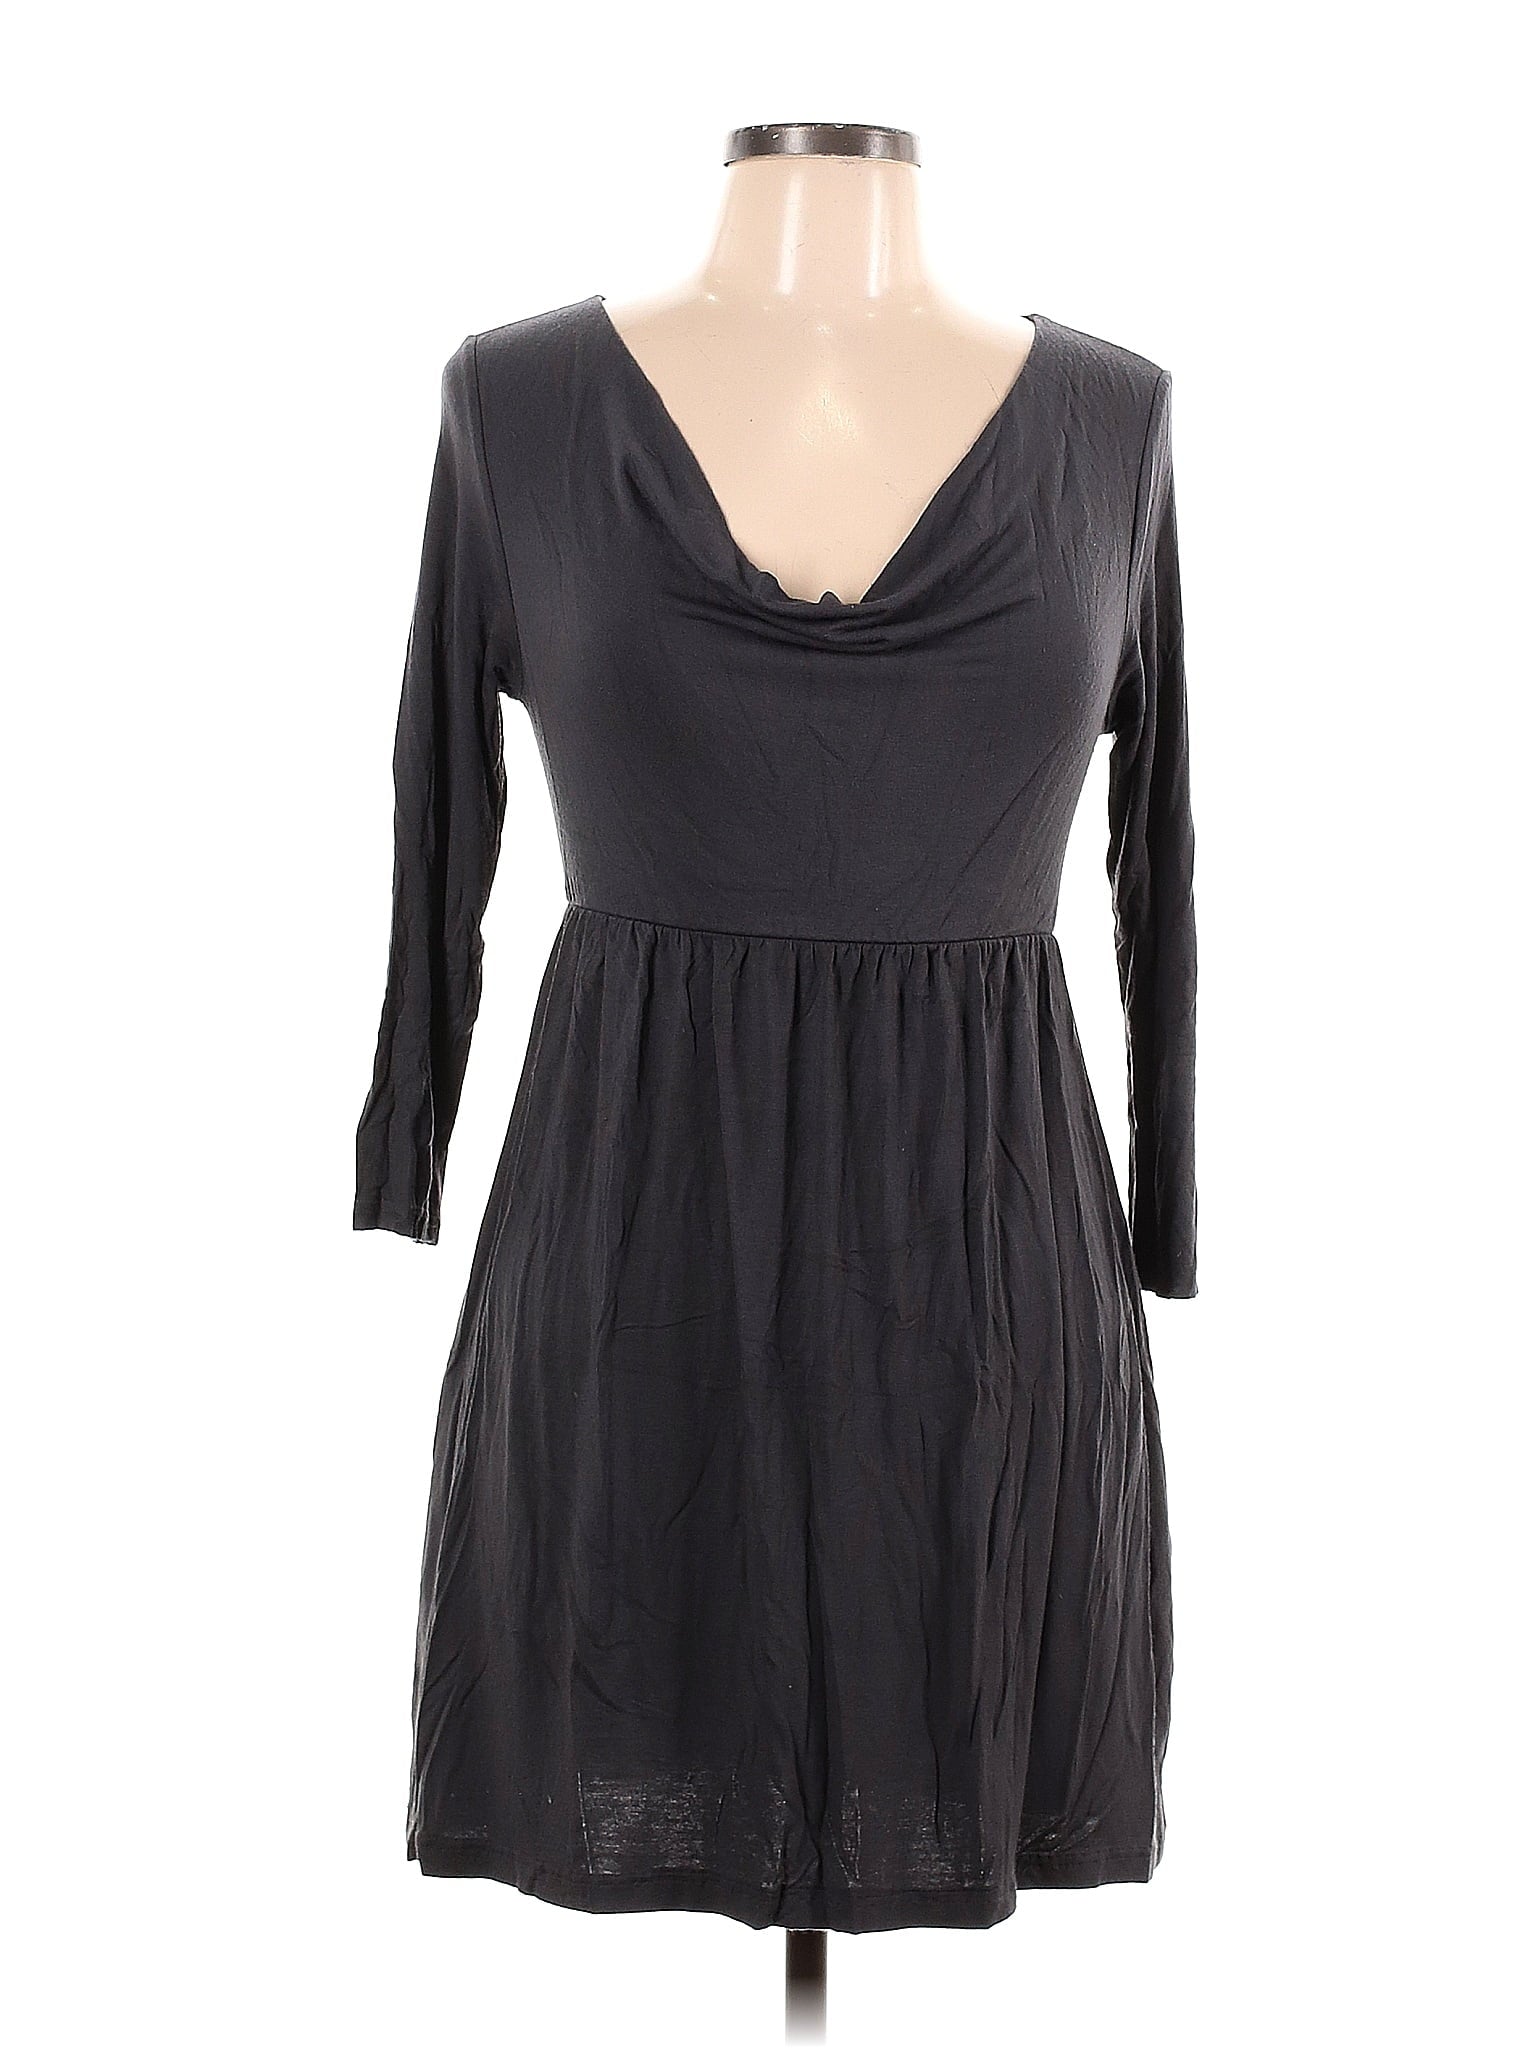 Casual Dress size - Lg (2)